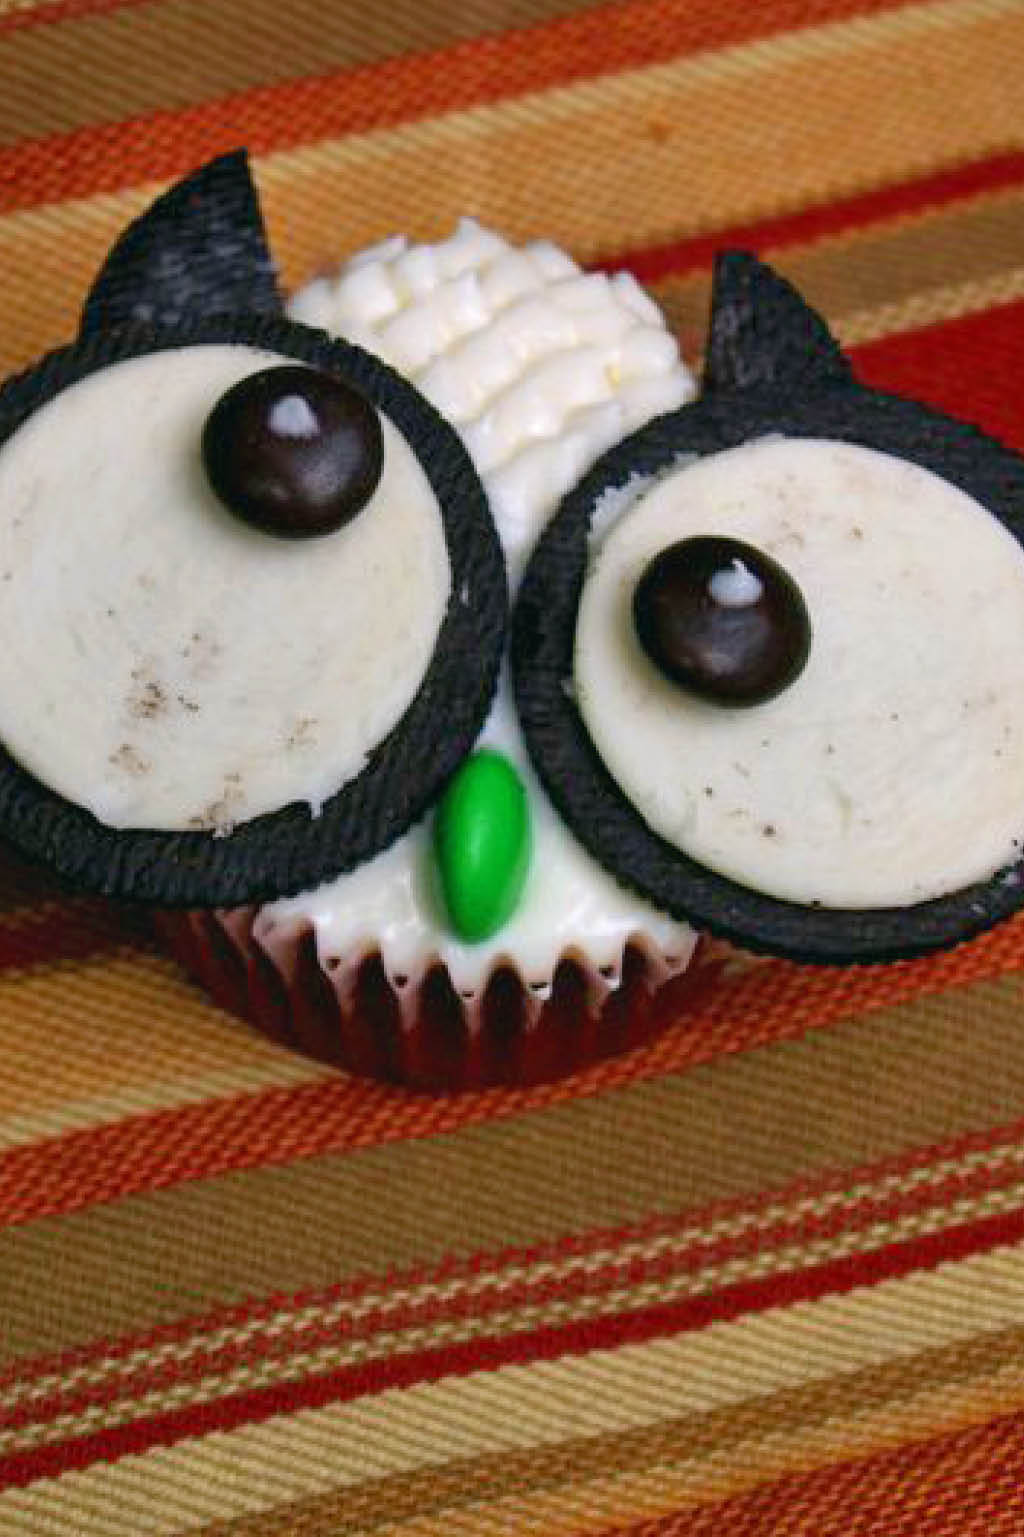 owl-cupcakes